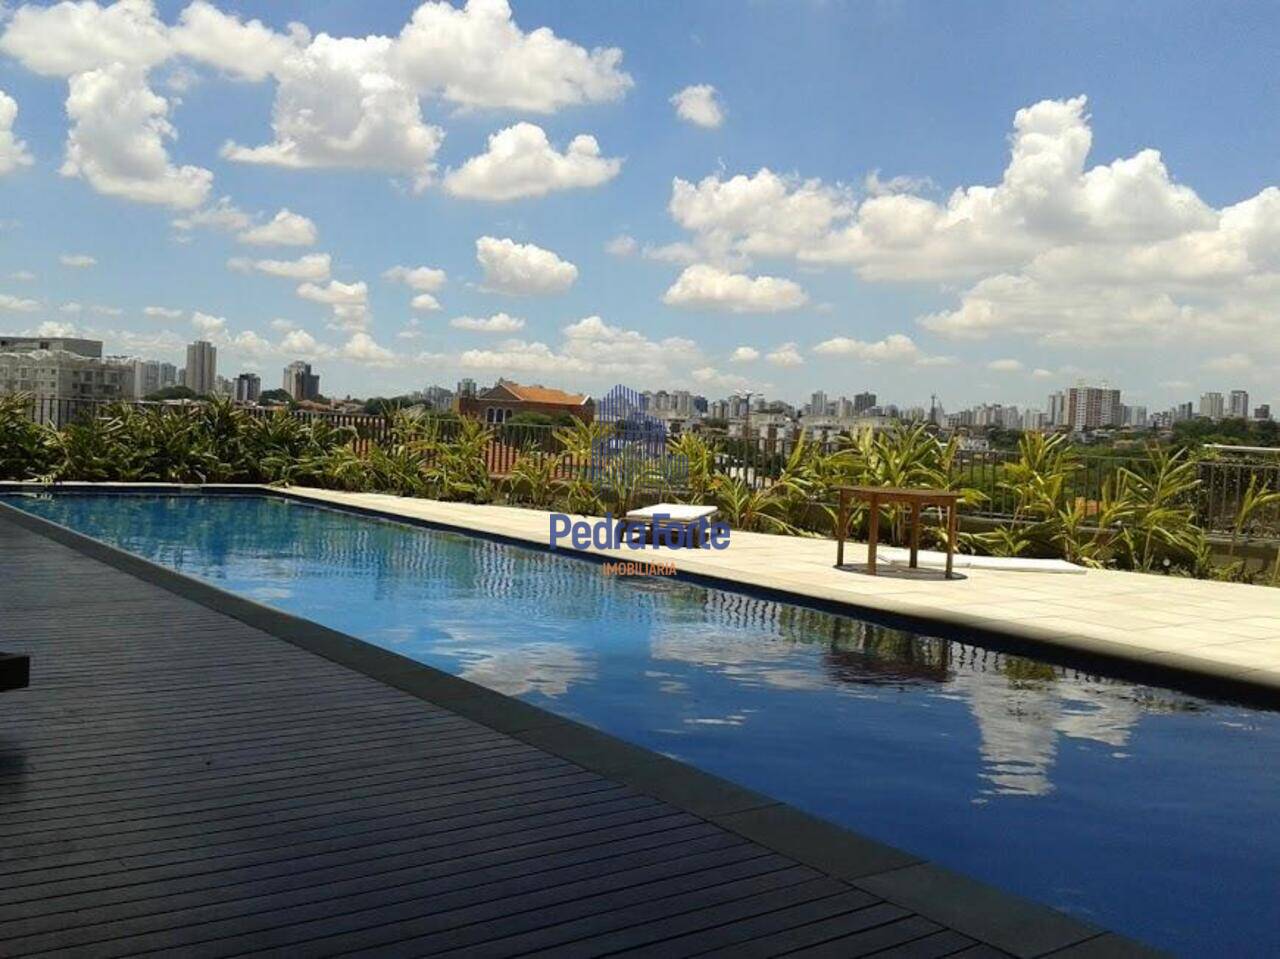 Apartamento Vila Ipojuca, São Paulo - SP